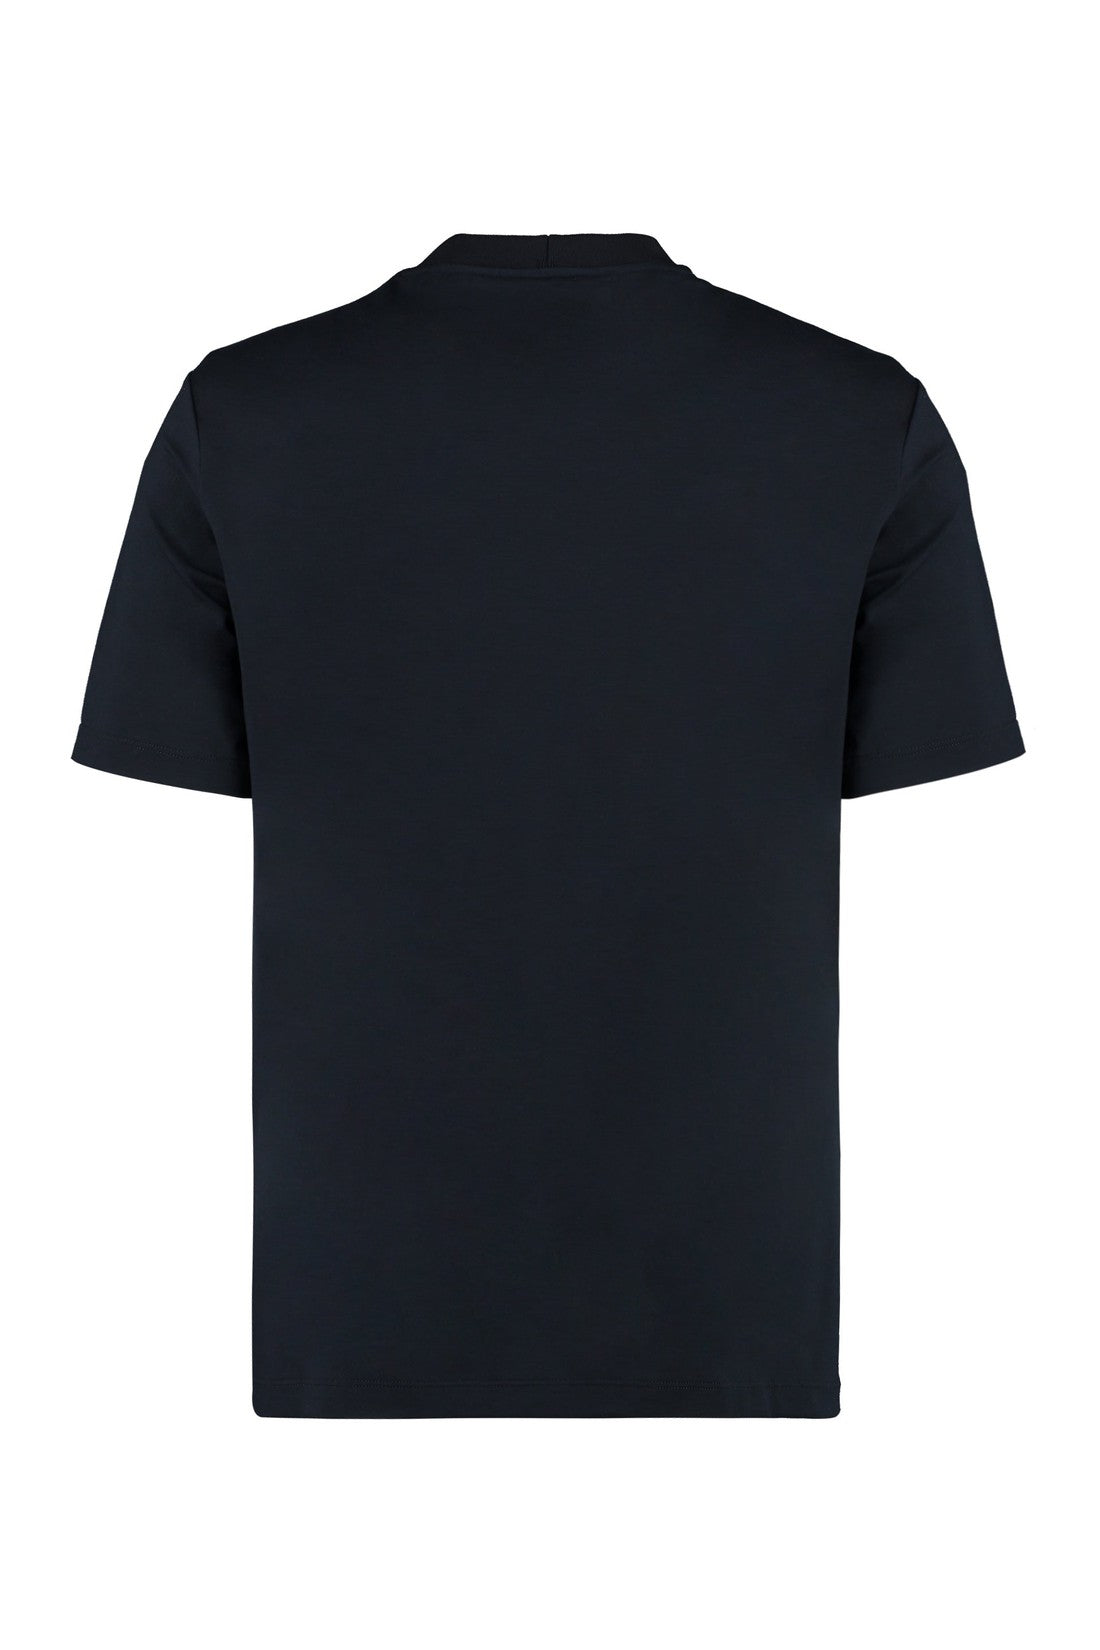 Giorgio Armani-OUTLET-SALE-Logo cotton t-shirt-ARCHIVIST